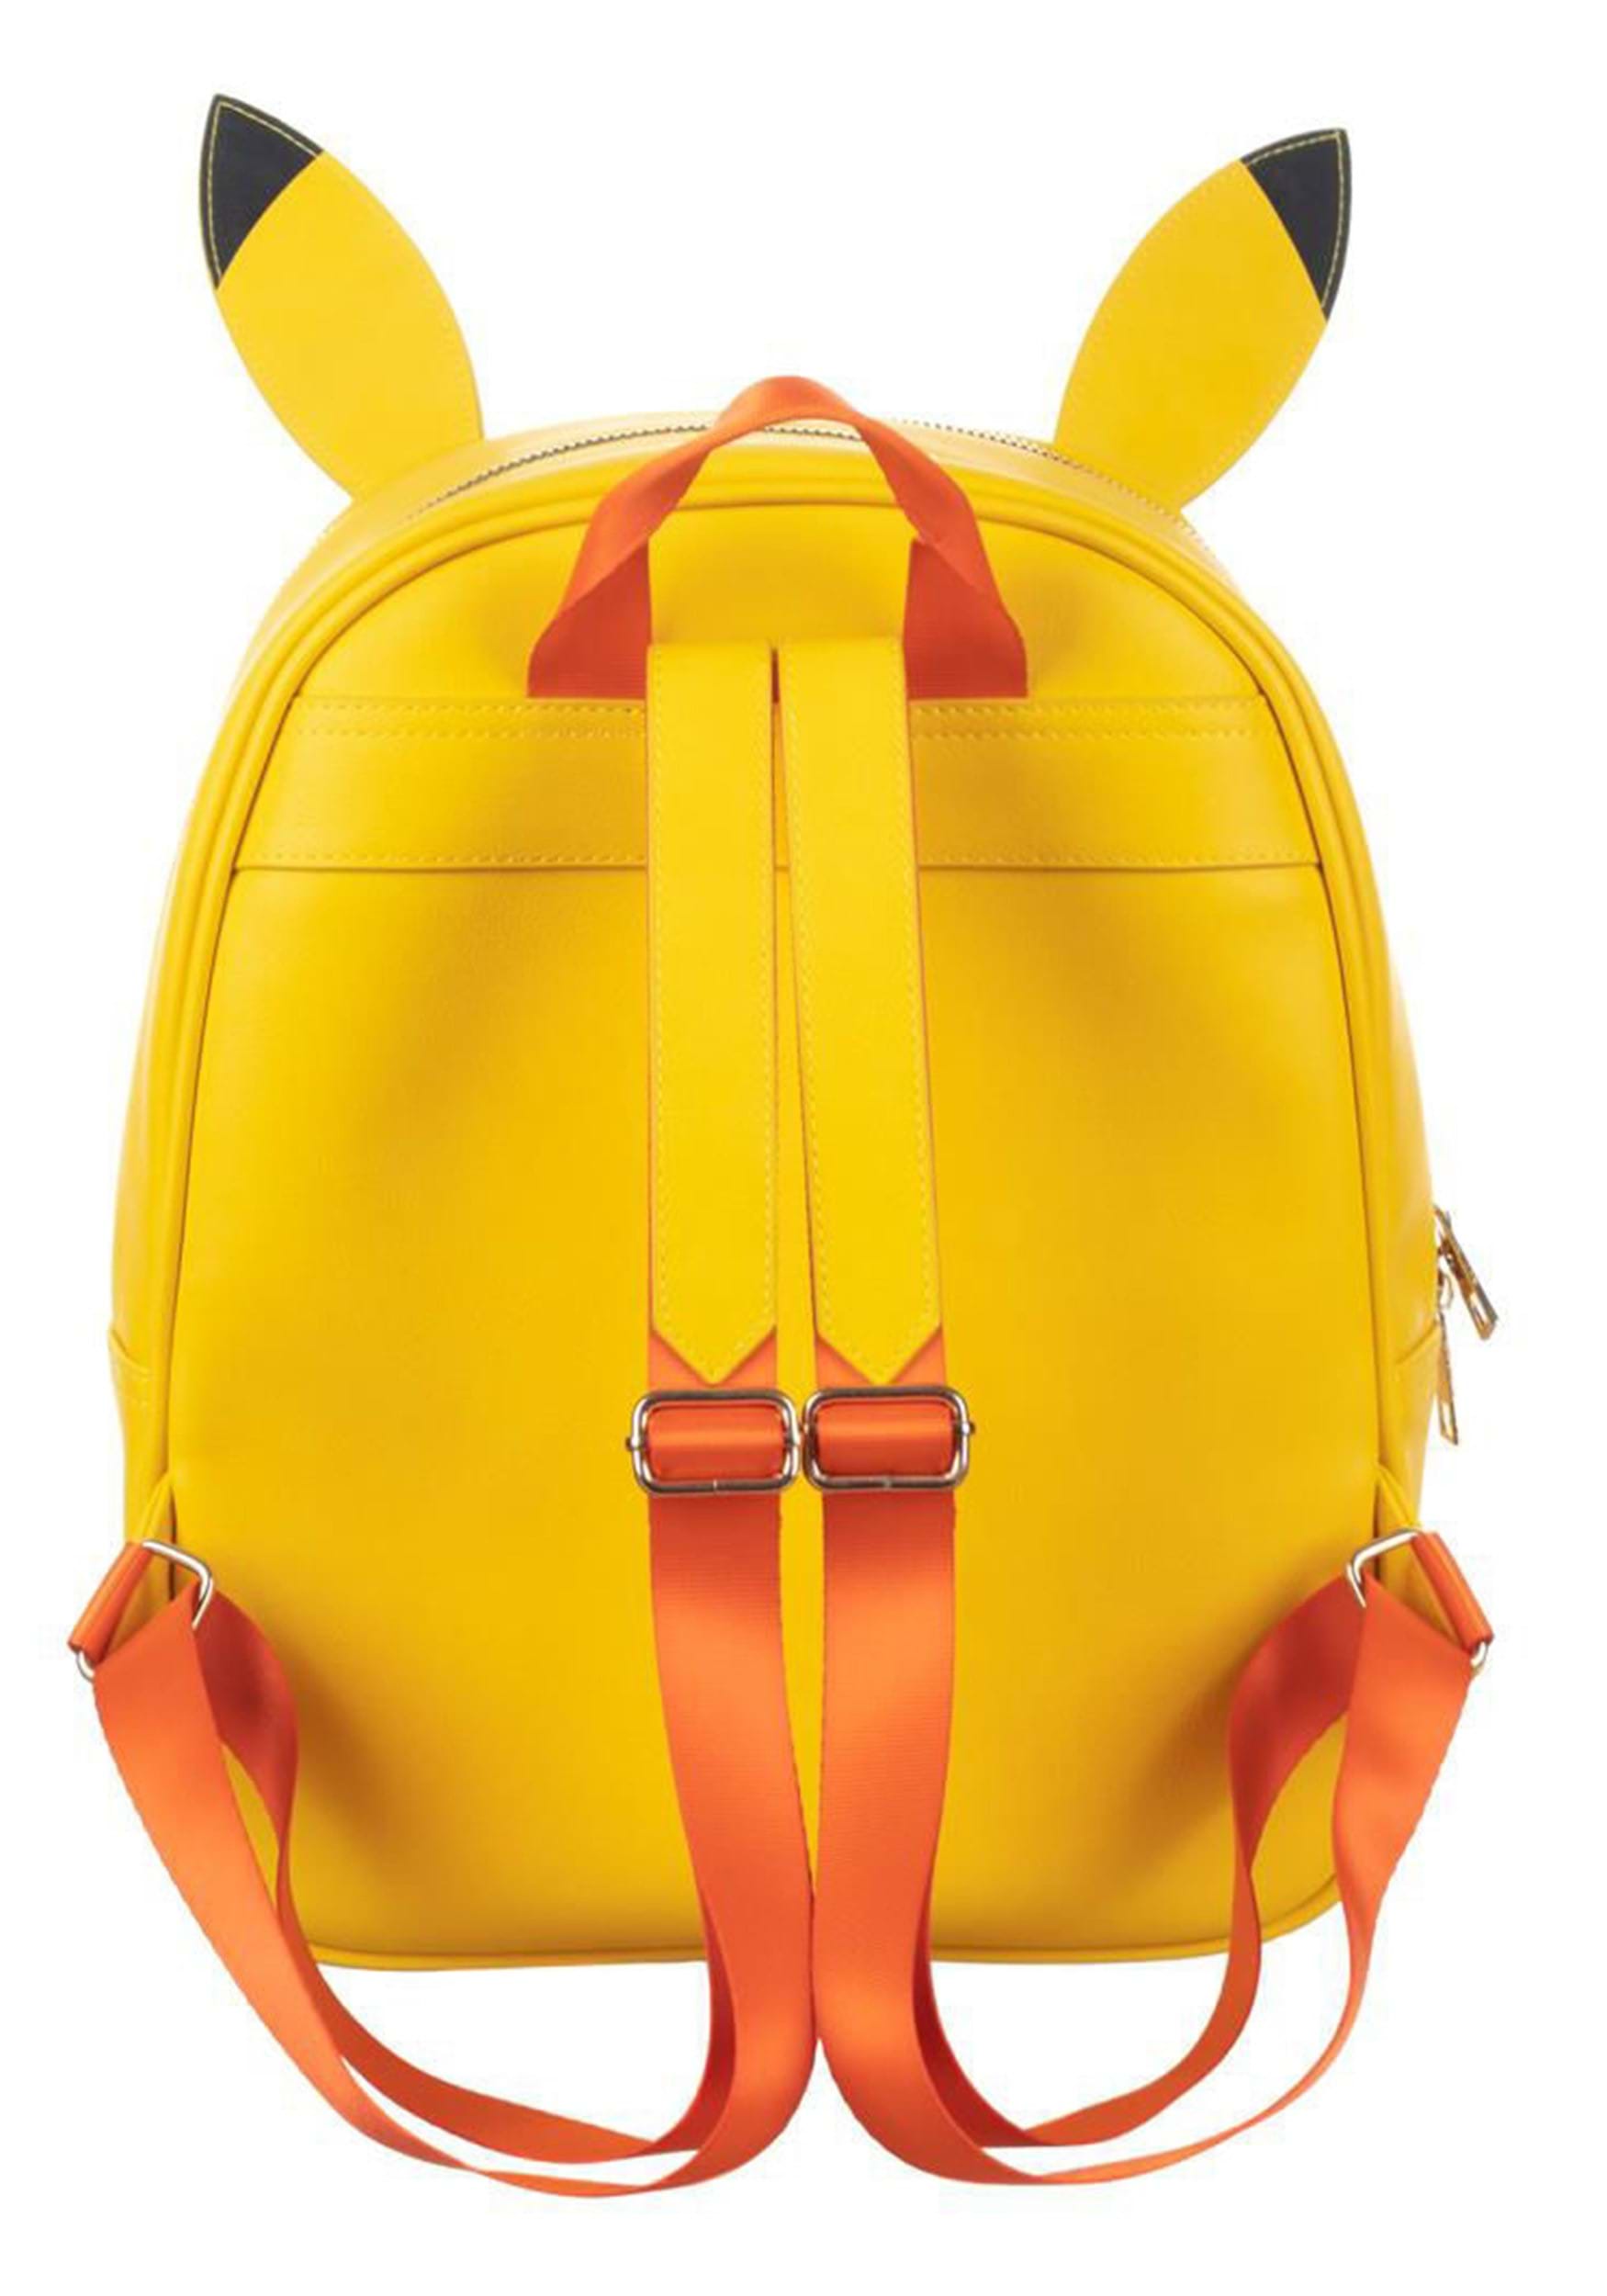 Pokemon Pikachu Backpack and Lunch box School Bag Kid Bookbag Best Gifts